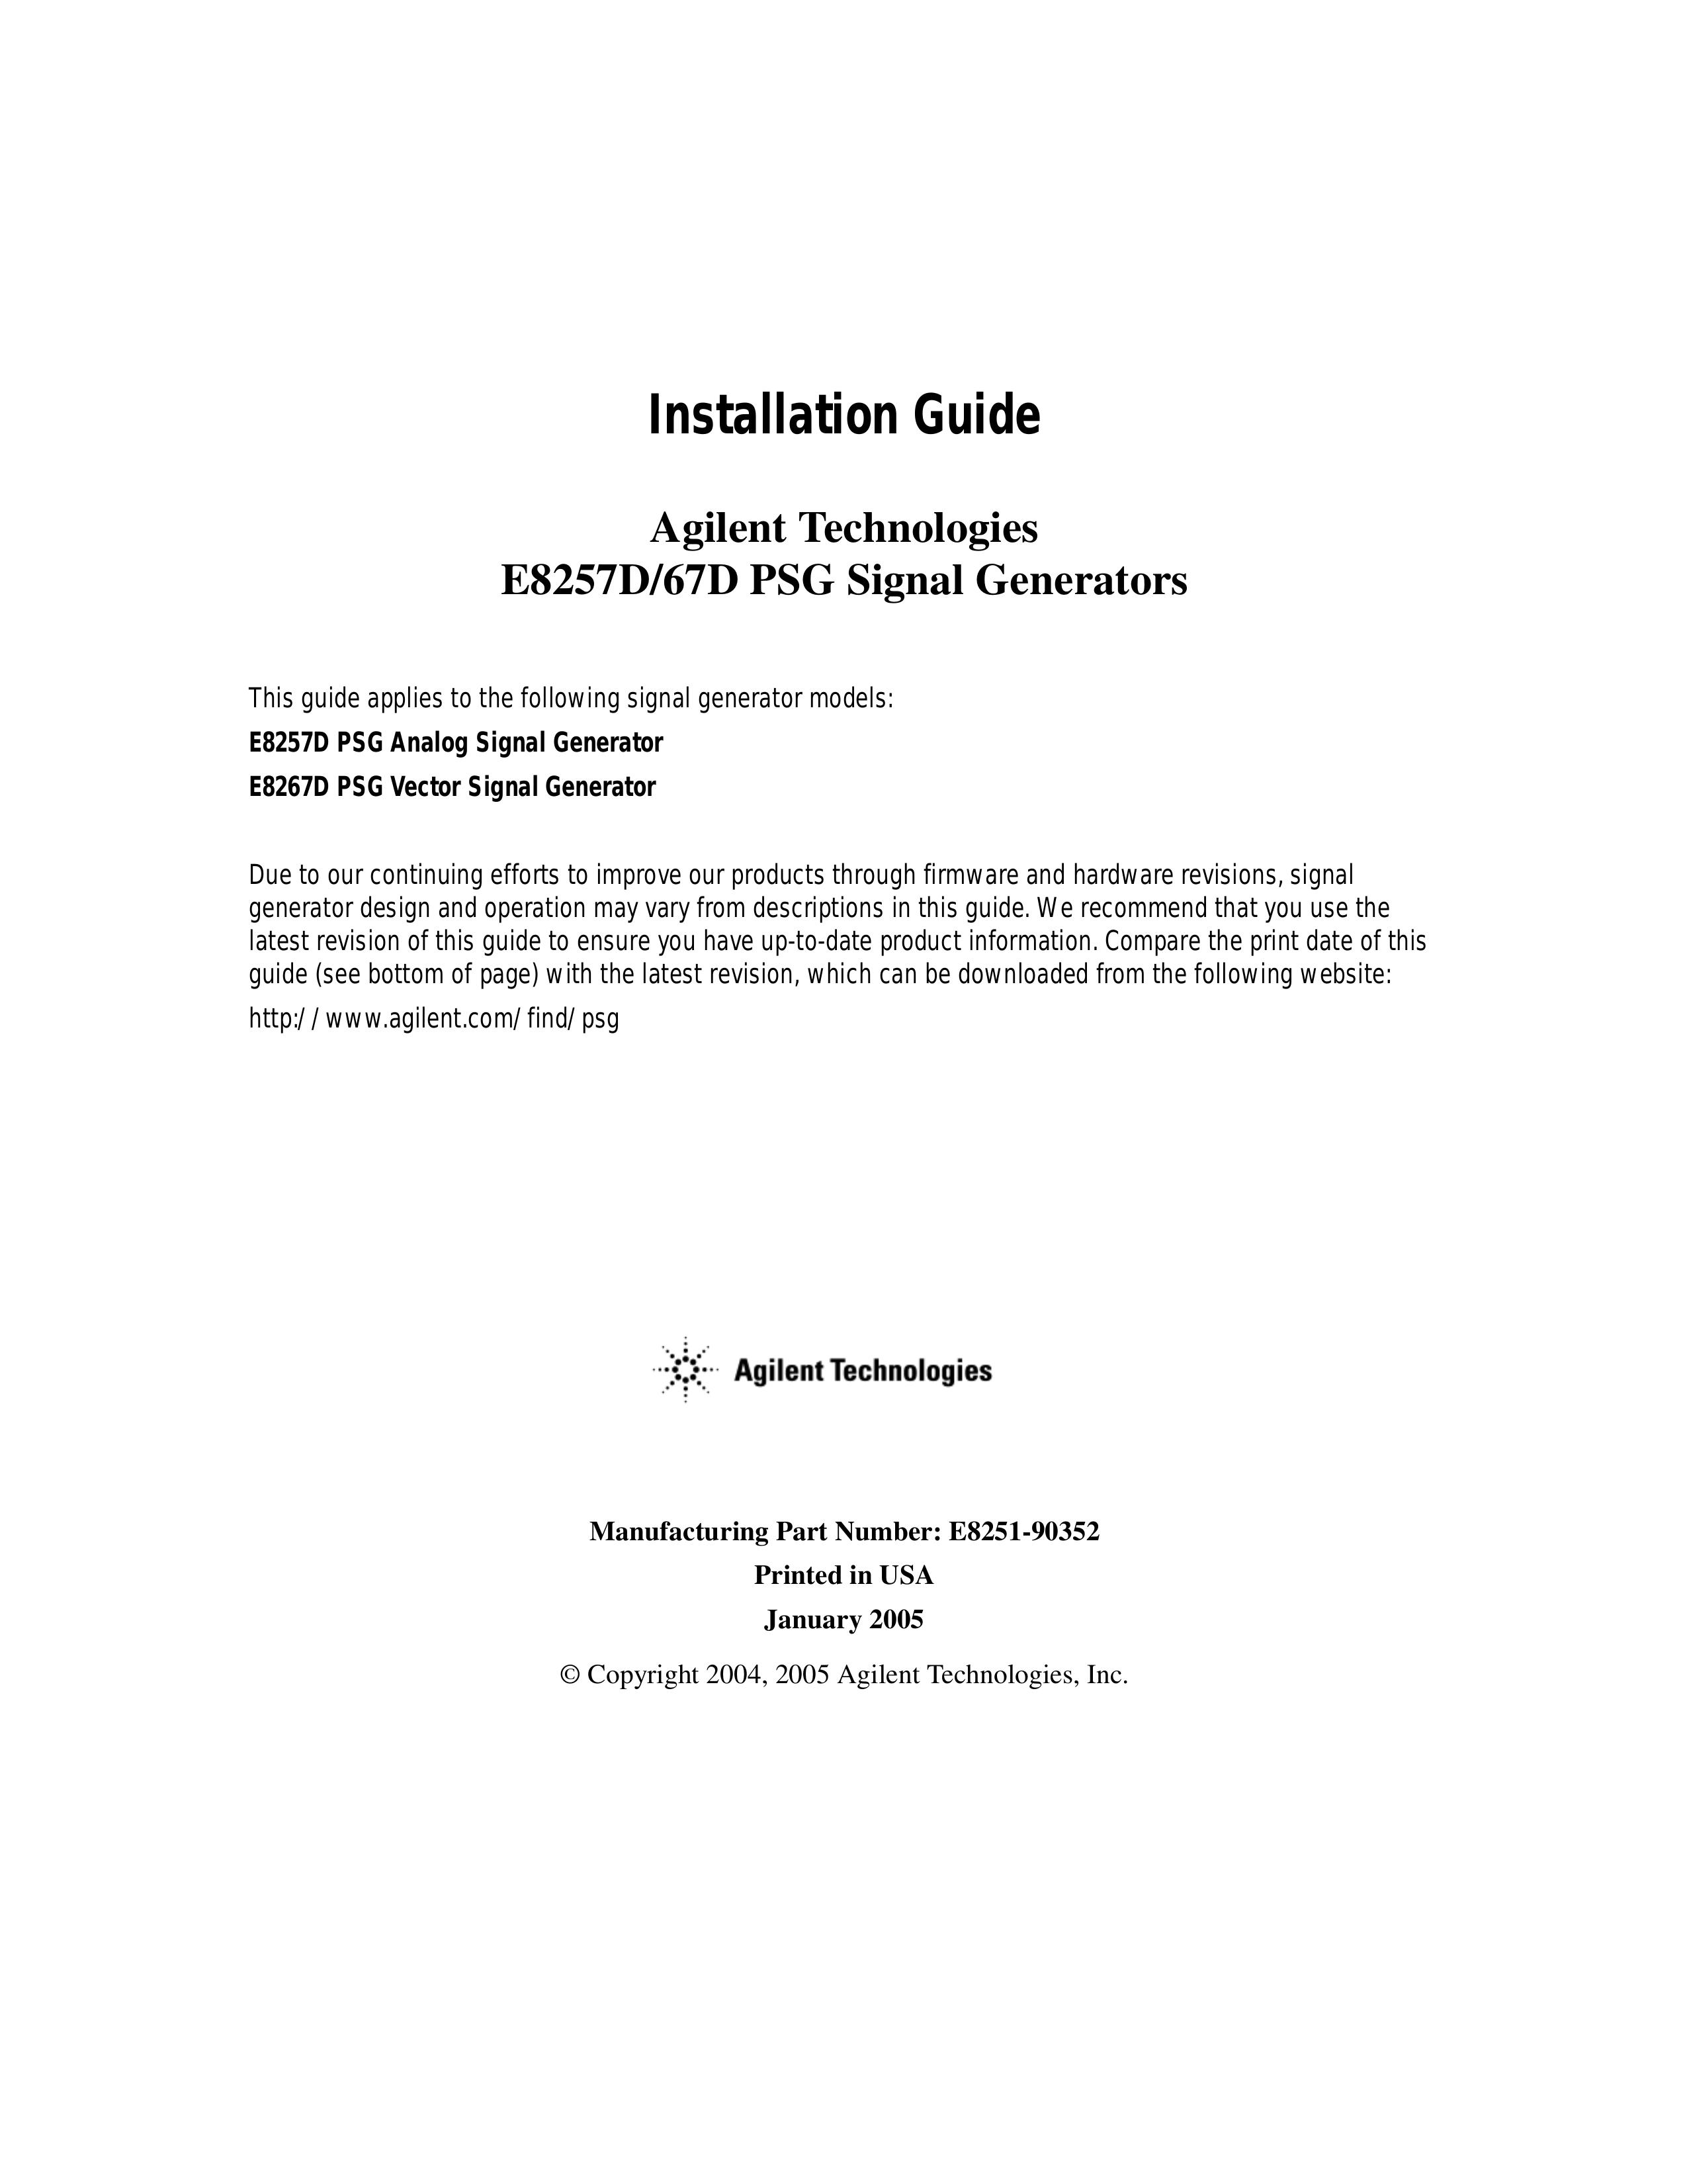 Agilent Technologies E8257D/67D Portable Generator User Manual